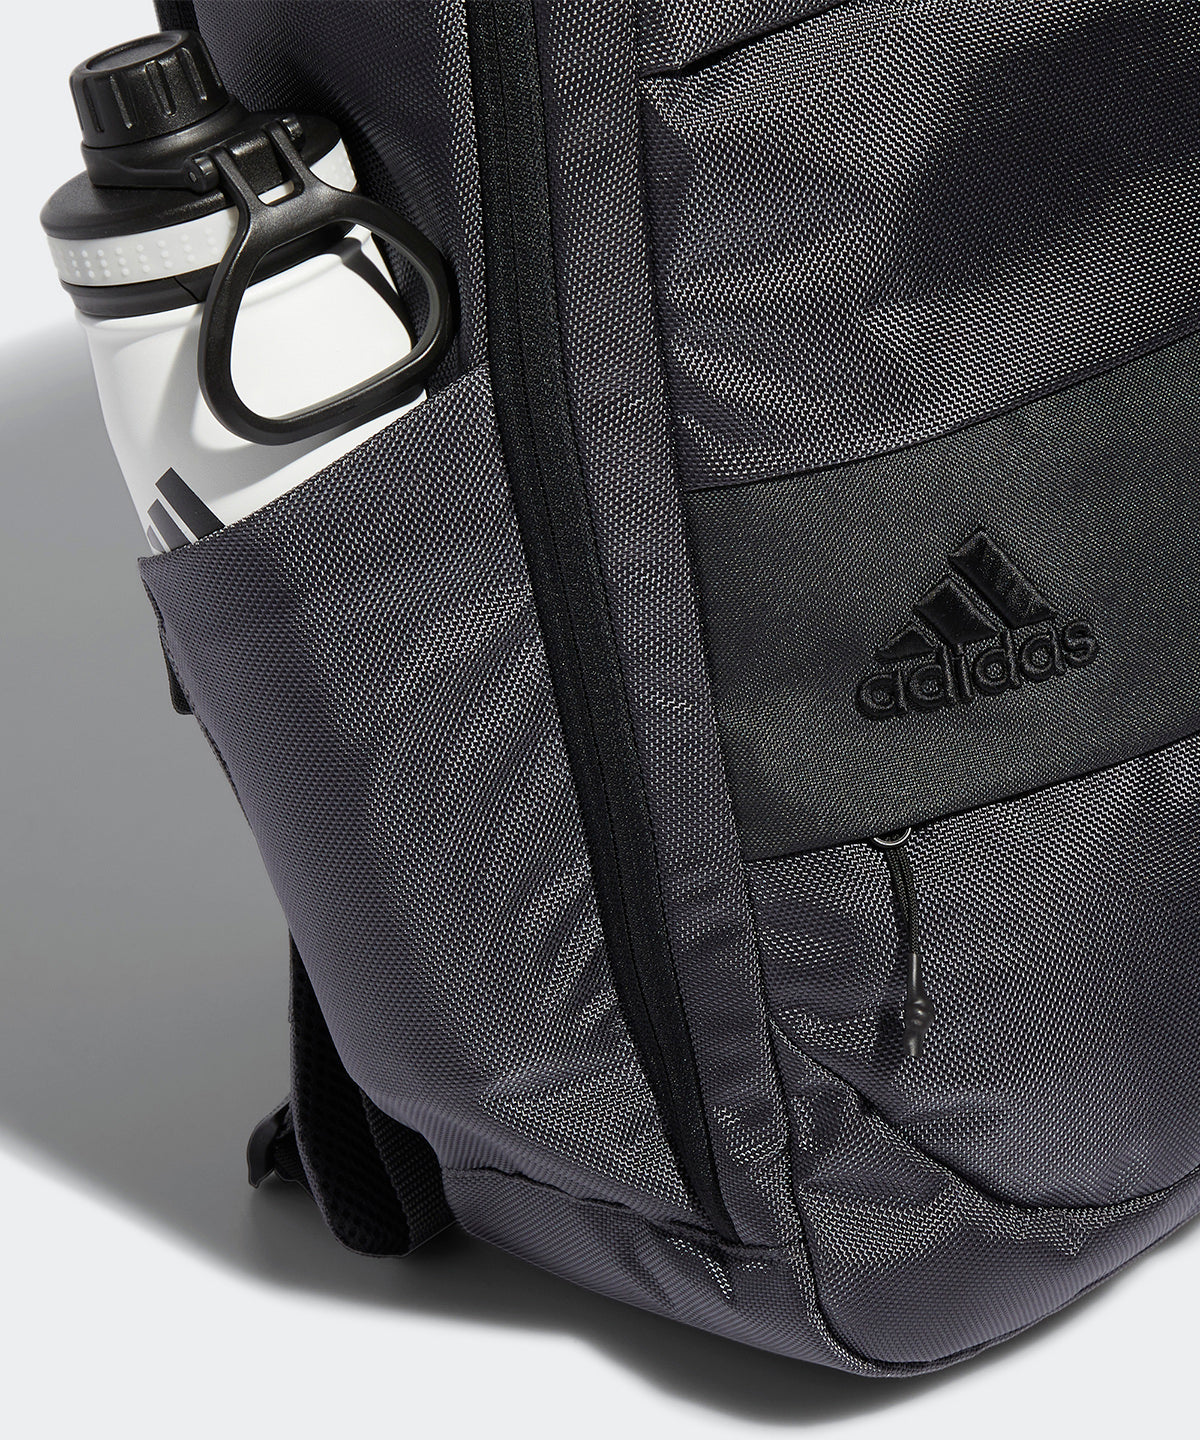 adidas® Golf premium backpack